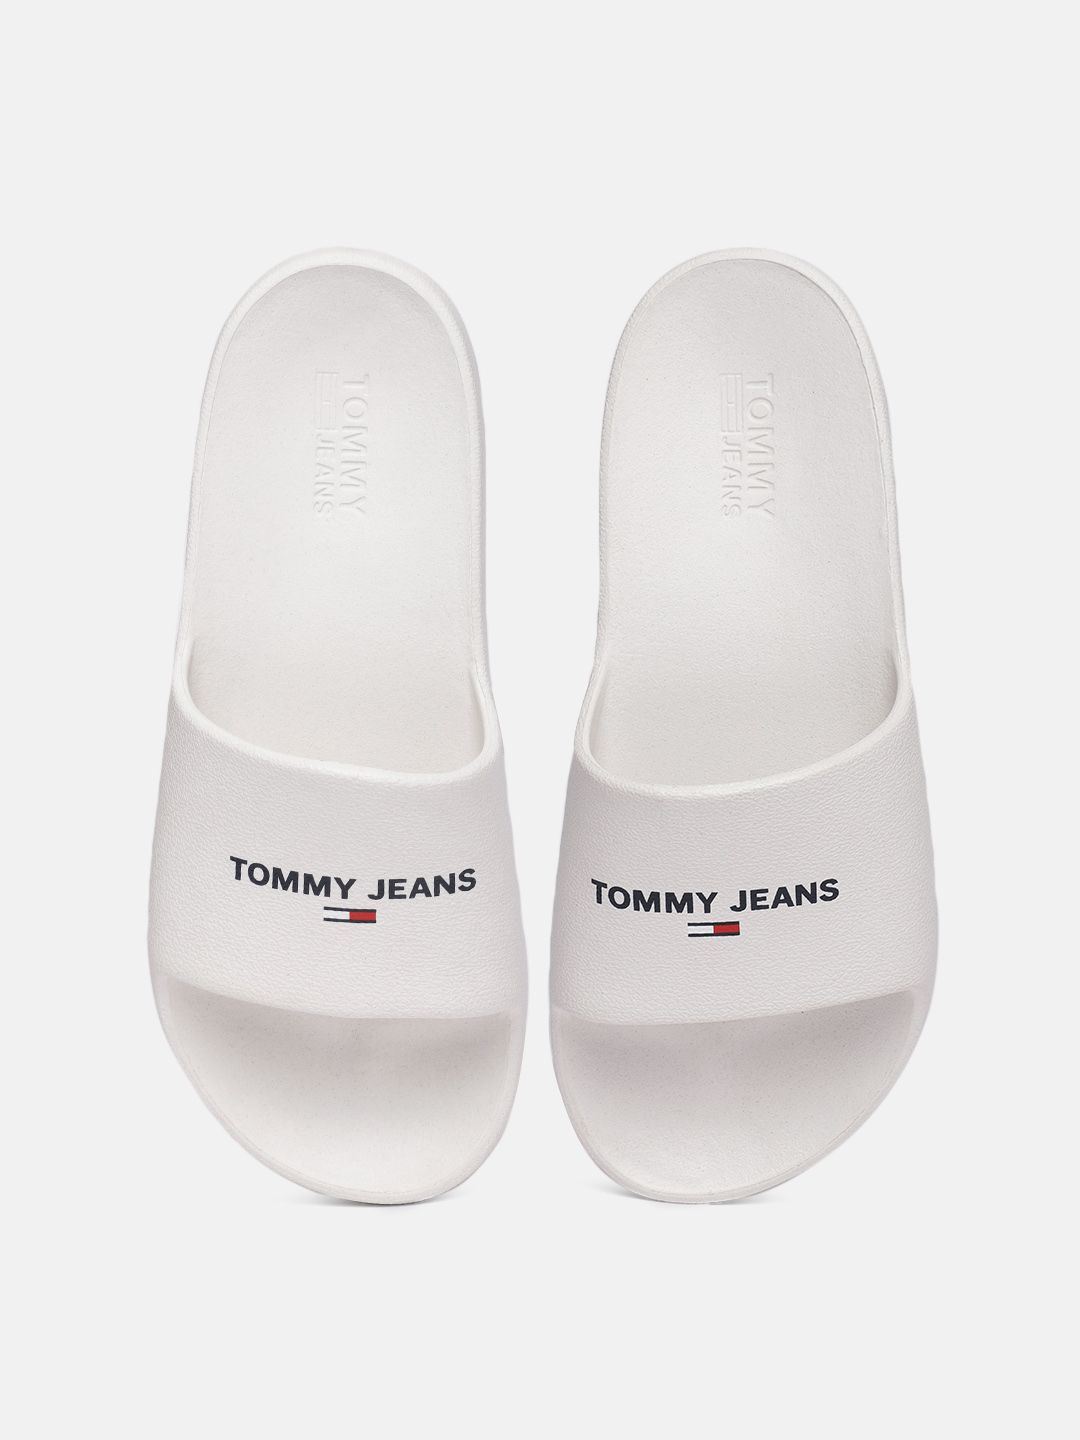 Tommy Hilfiger Jeans Women White Brand Logo Printed Croslite Essential Pool Sliders Price in India